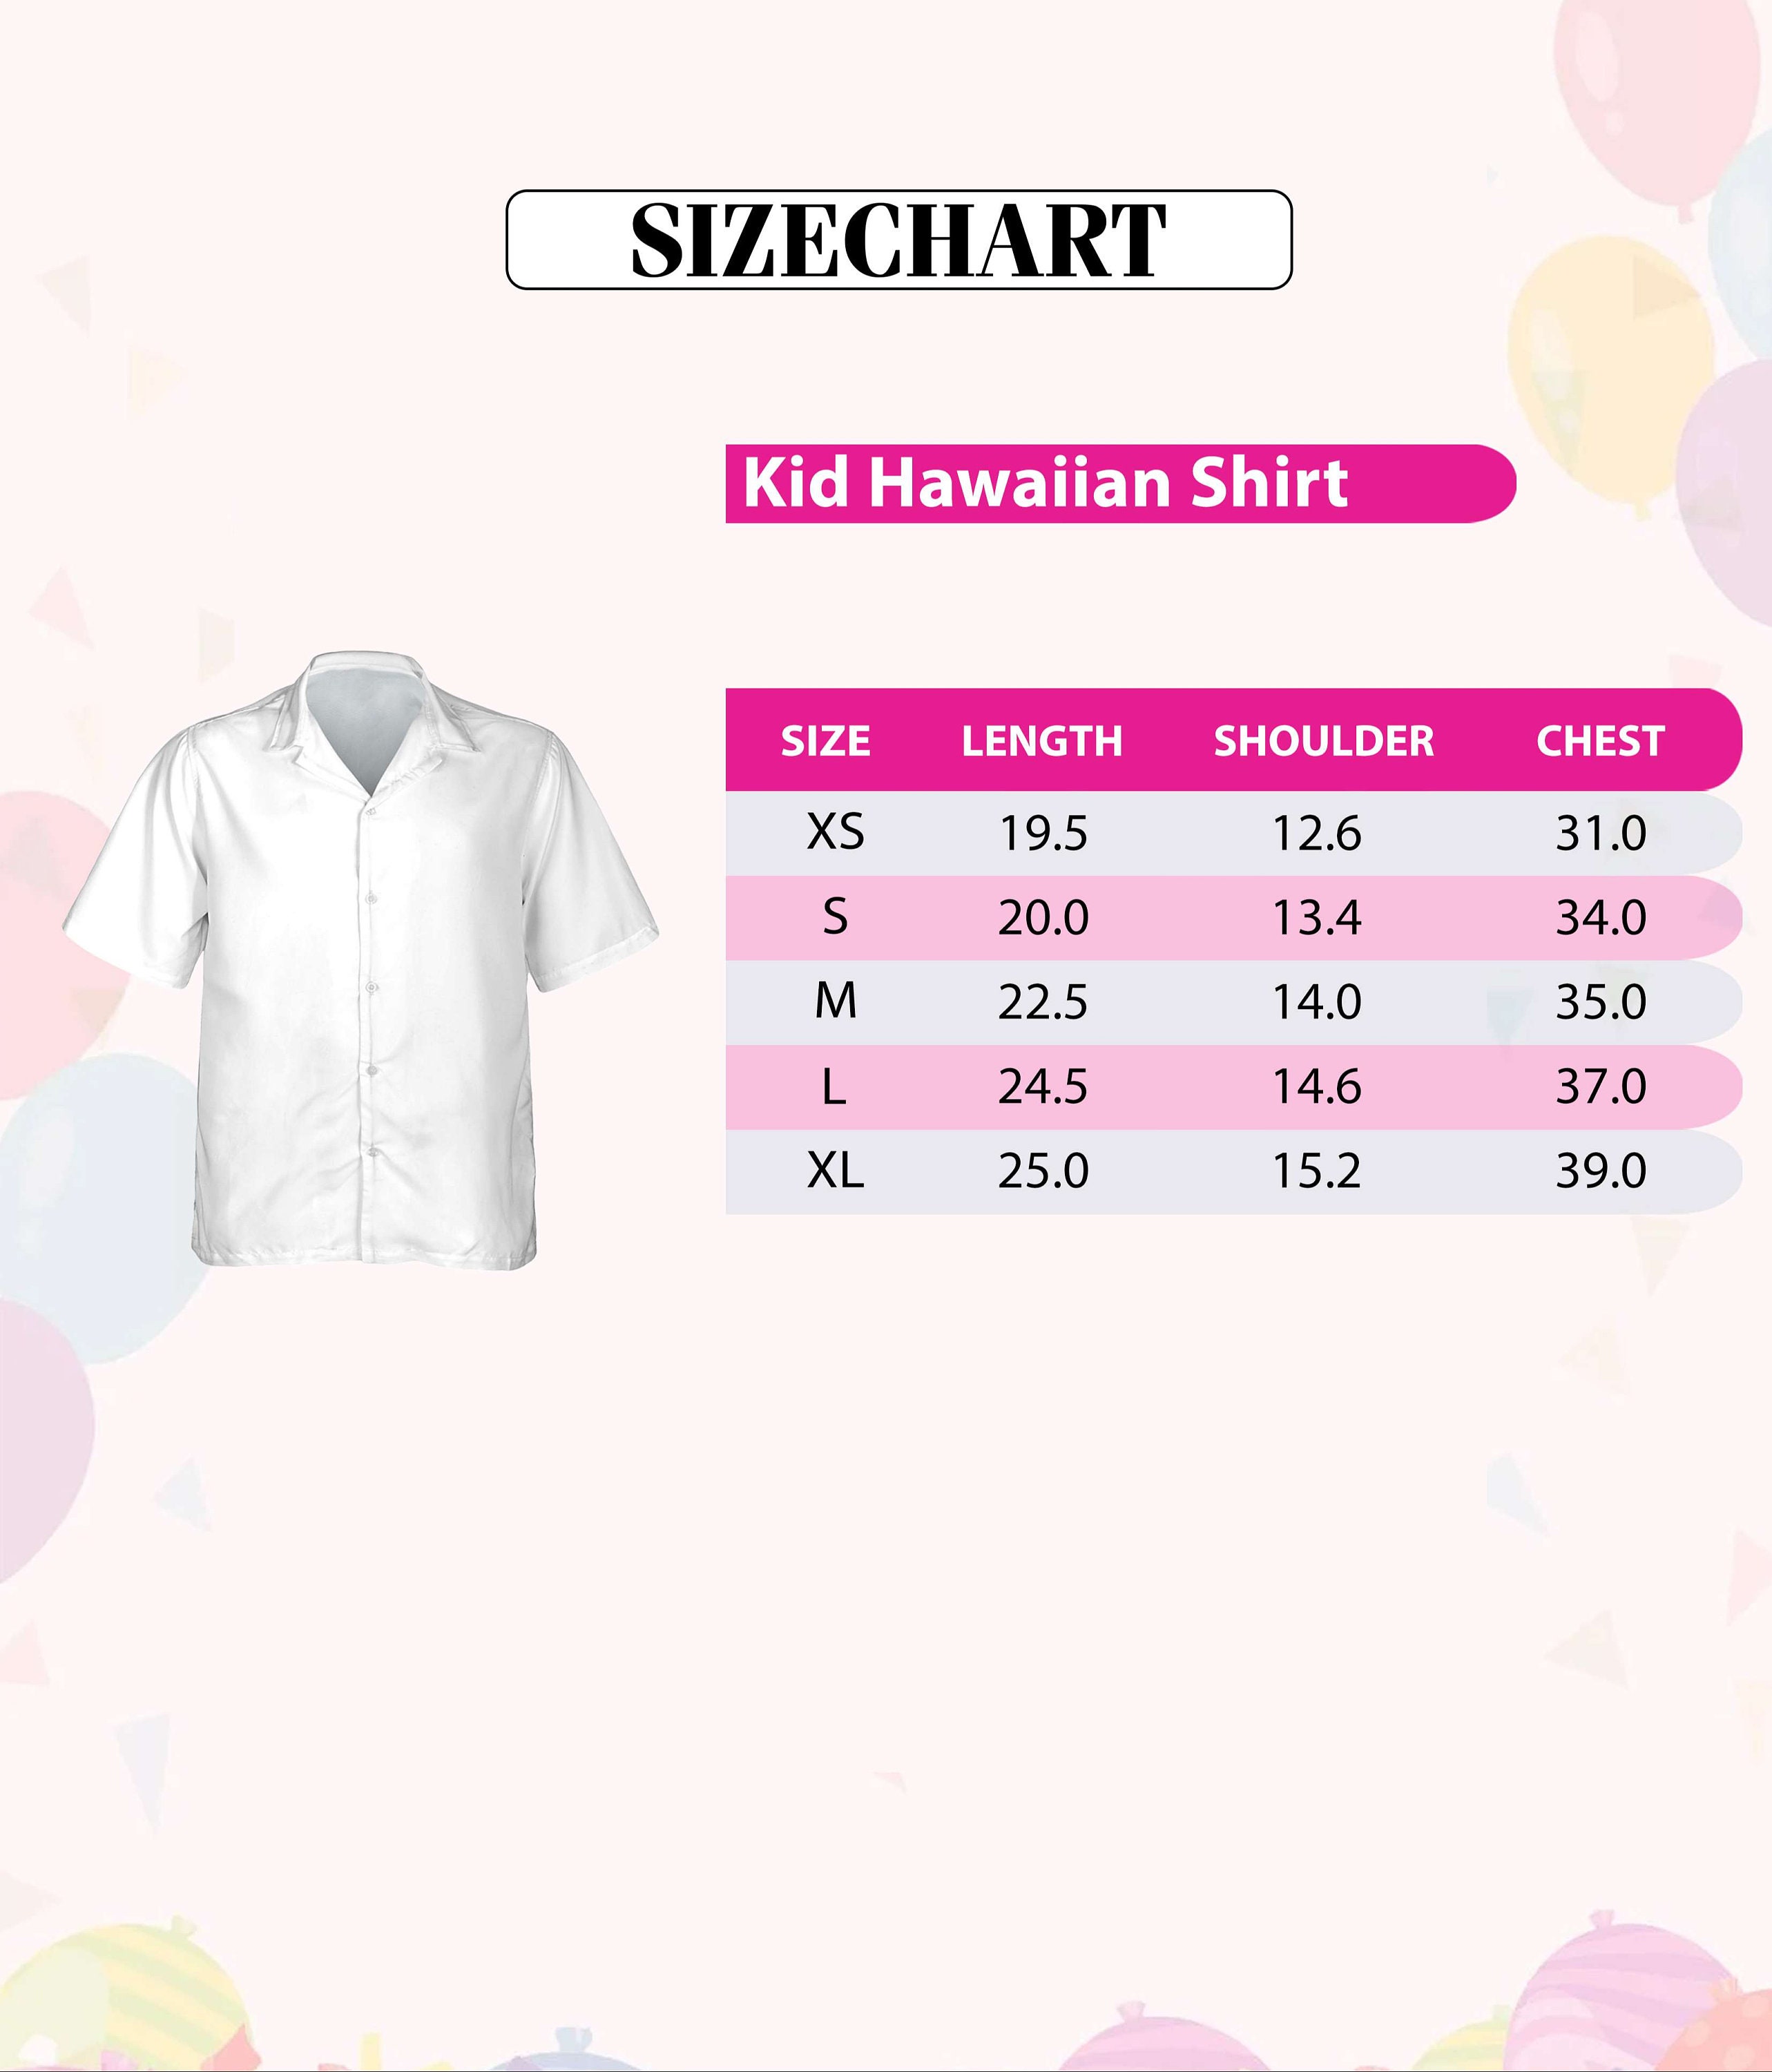 Tiger Hawaii Beach Shirt, Tiger Button Up Shirt Holiday, Bear Movie Hawaiian Shirt